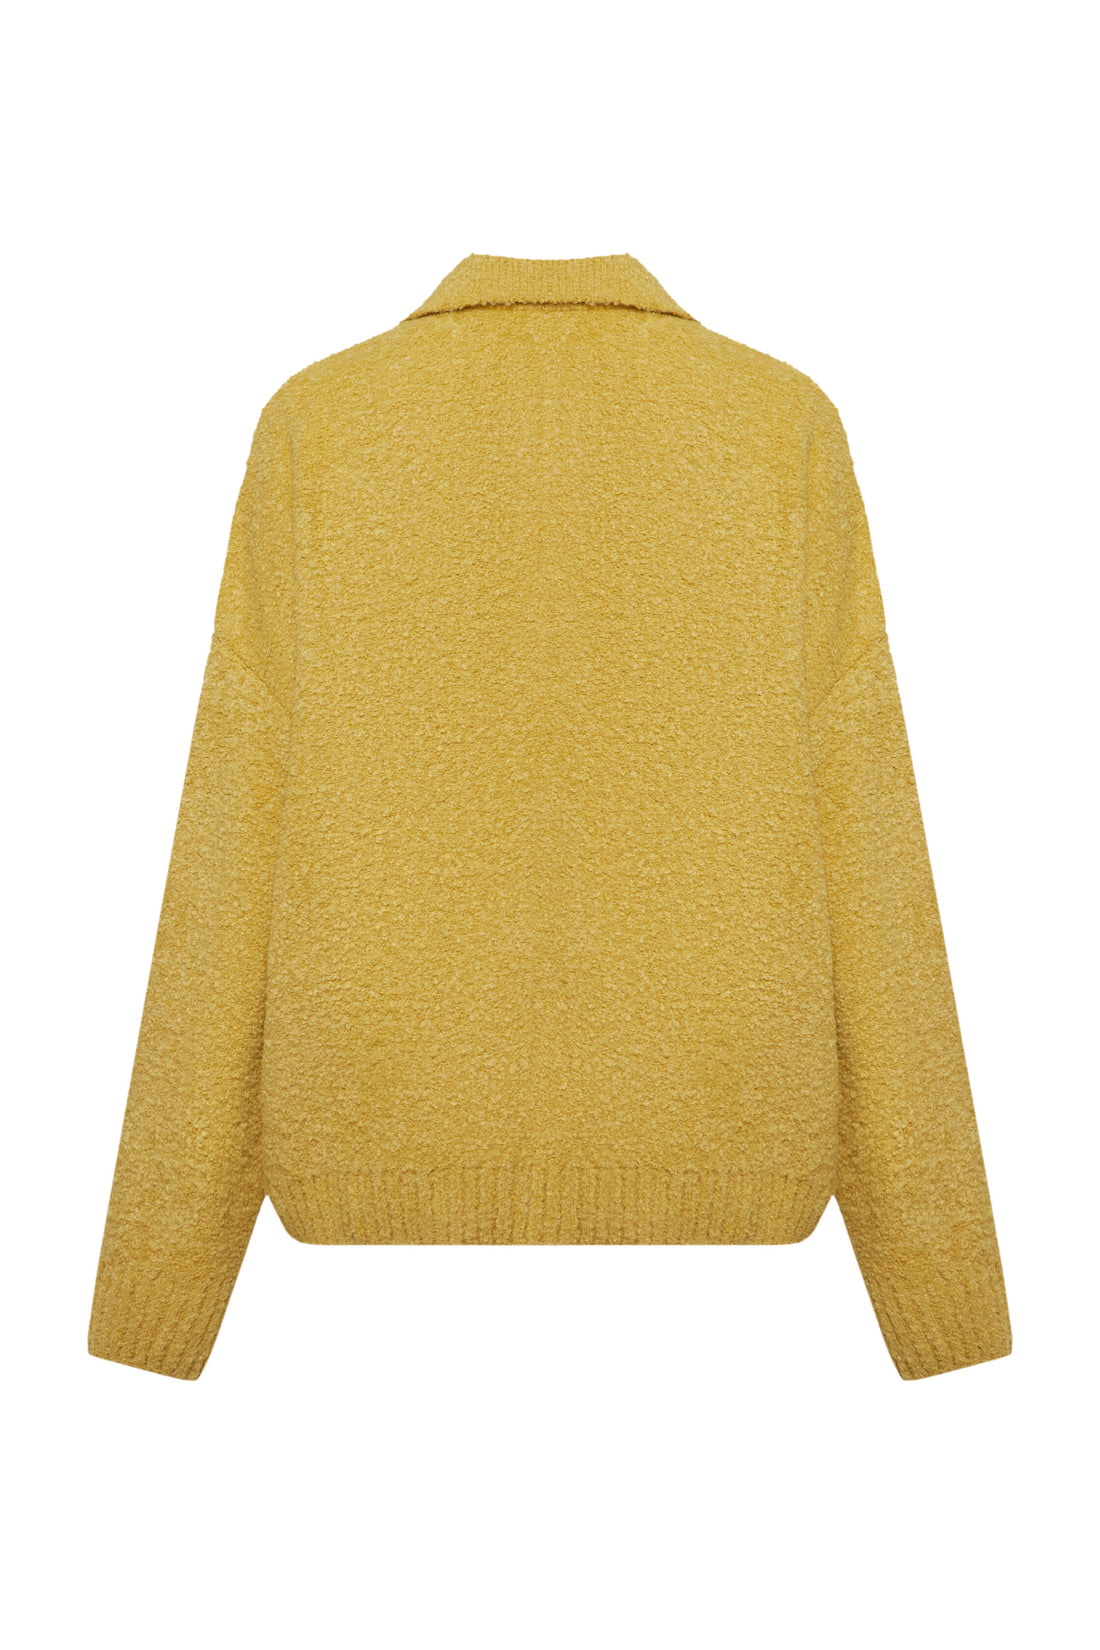 Bouclé svetr, žlutý (0202)